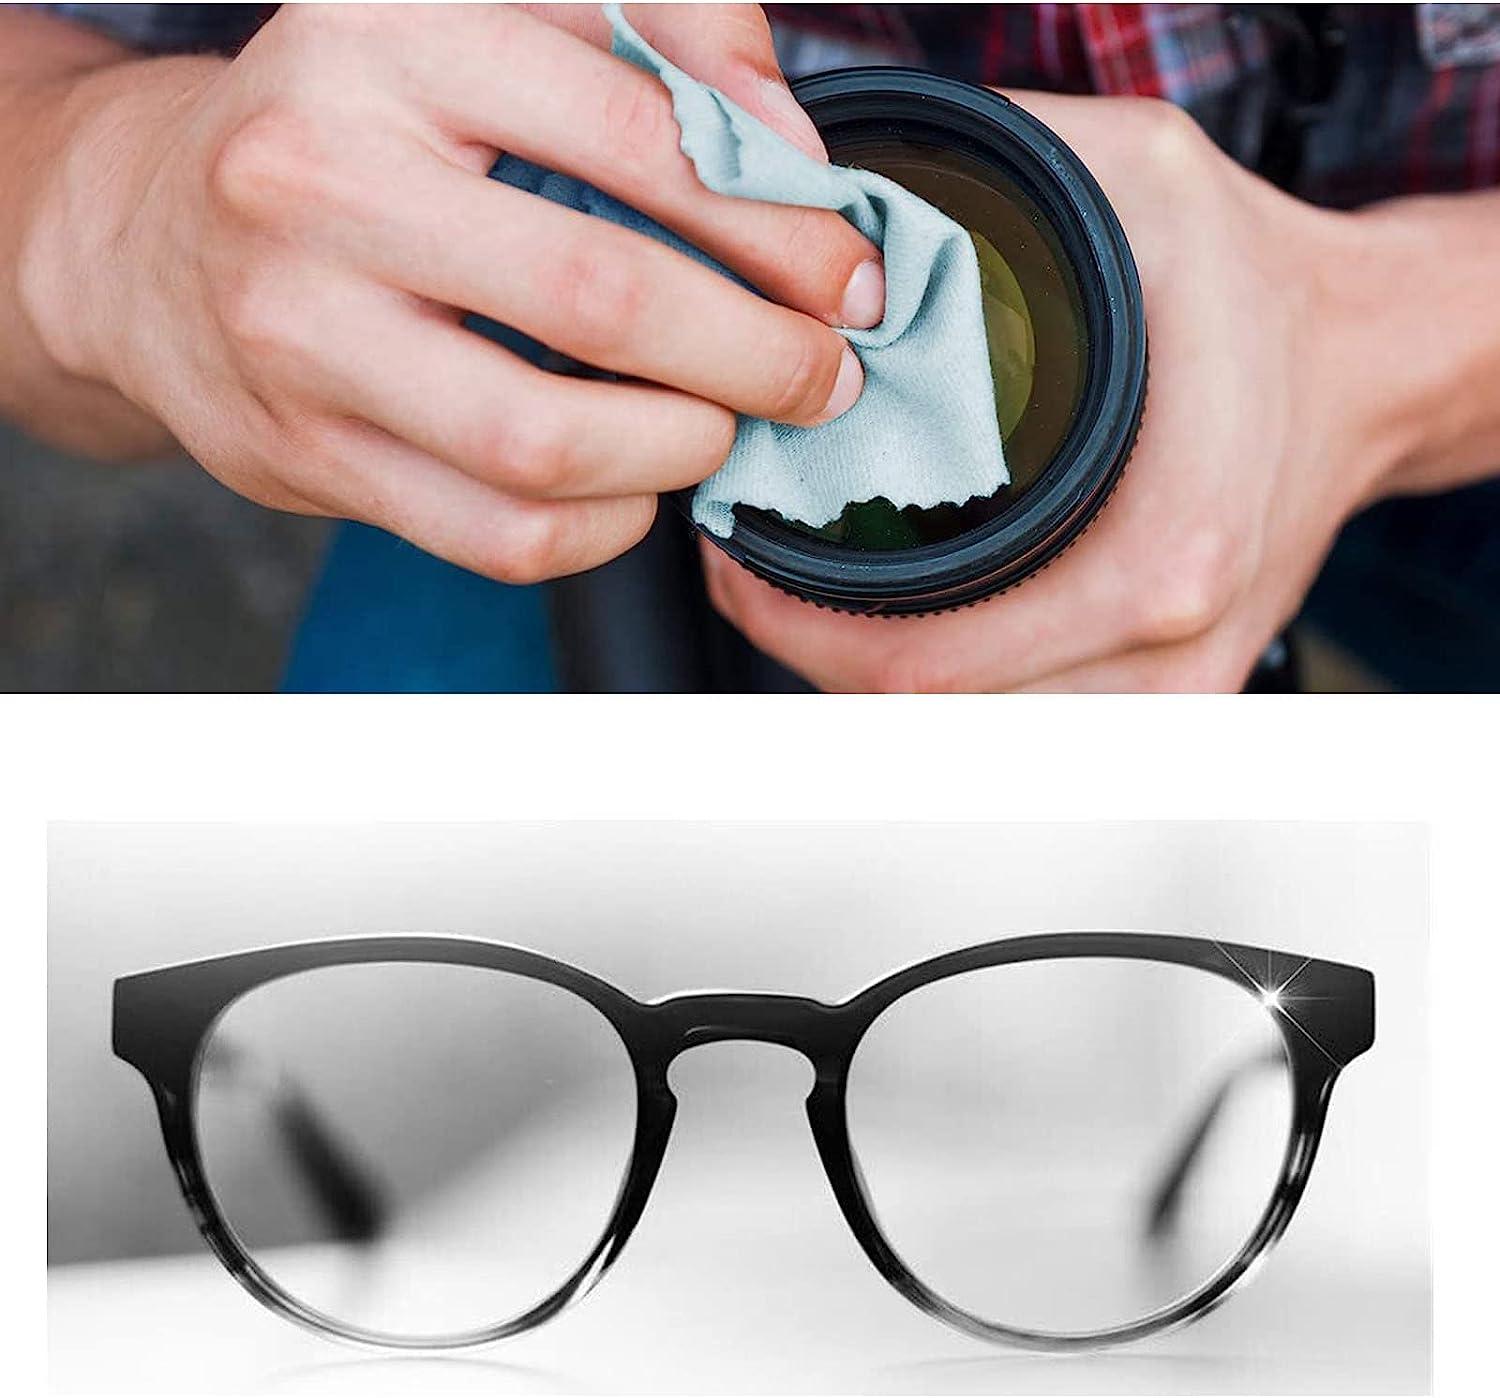 100ml Eye Glasses Scratch Repair Liquid Spray Lens Windshield